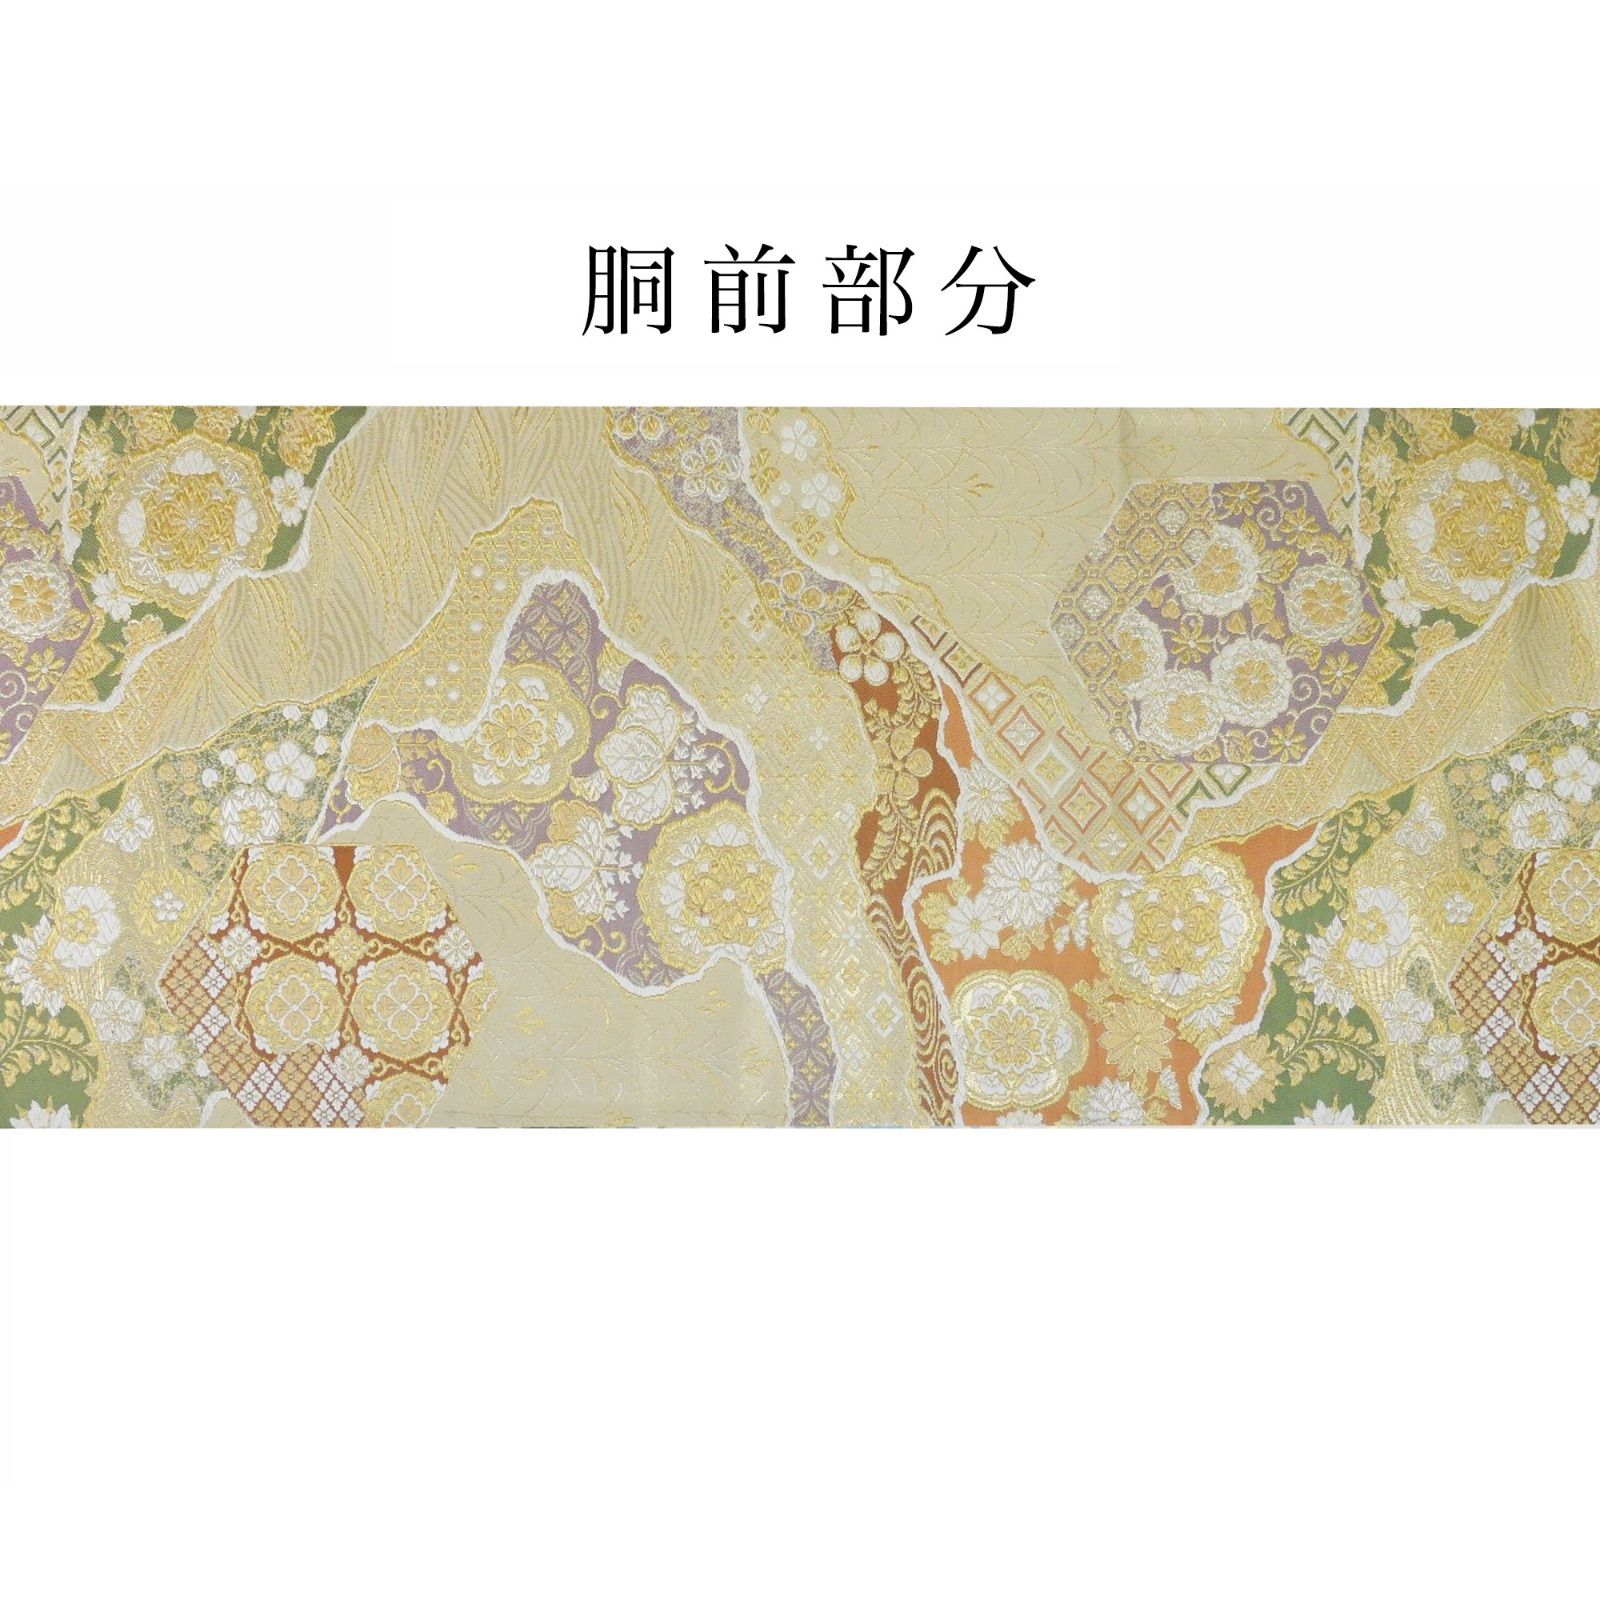 新品 西陣 帯 袋帯 ゴールド 金 古典 花 仕立済 dhukuroobi83